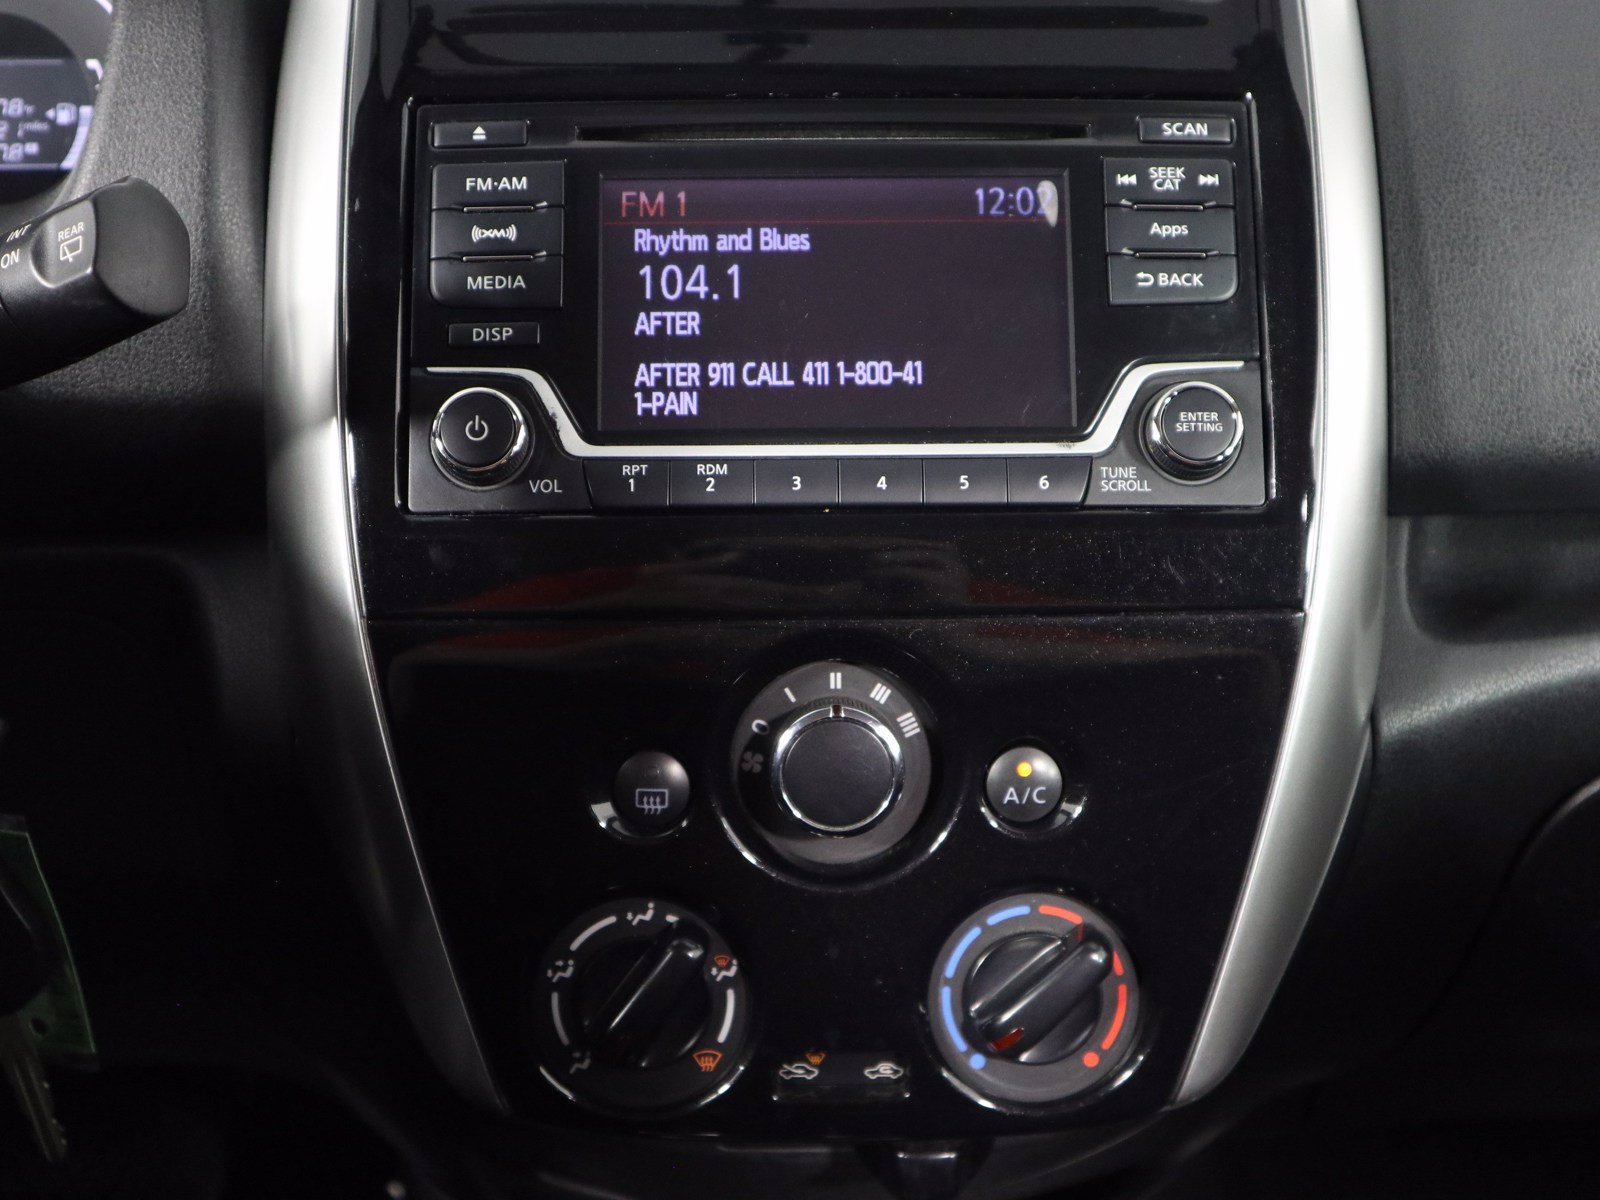 PreOwned 2016 Nissan Versa Note SV FWD Hatchback